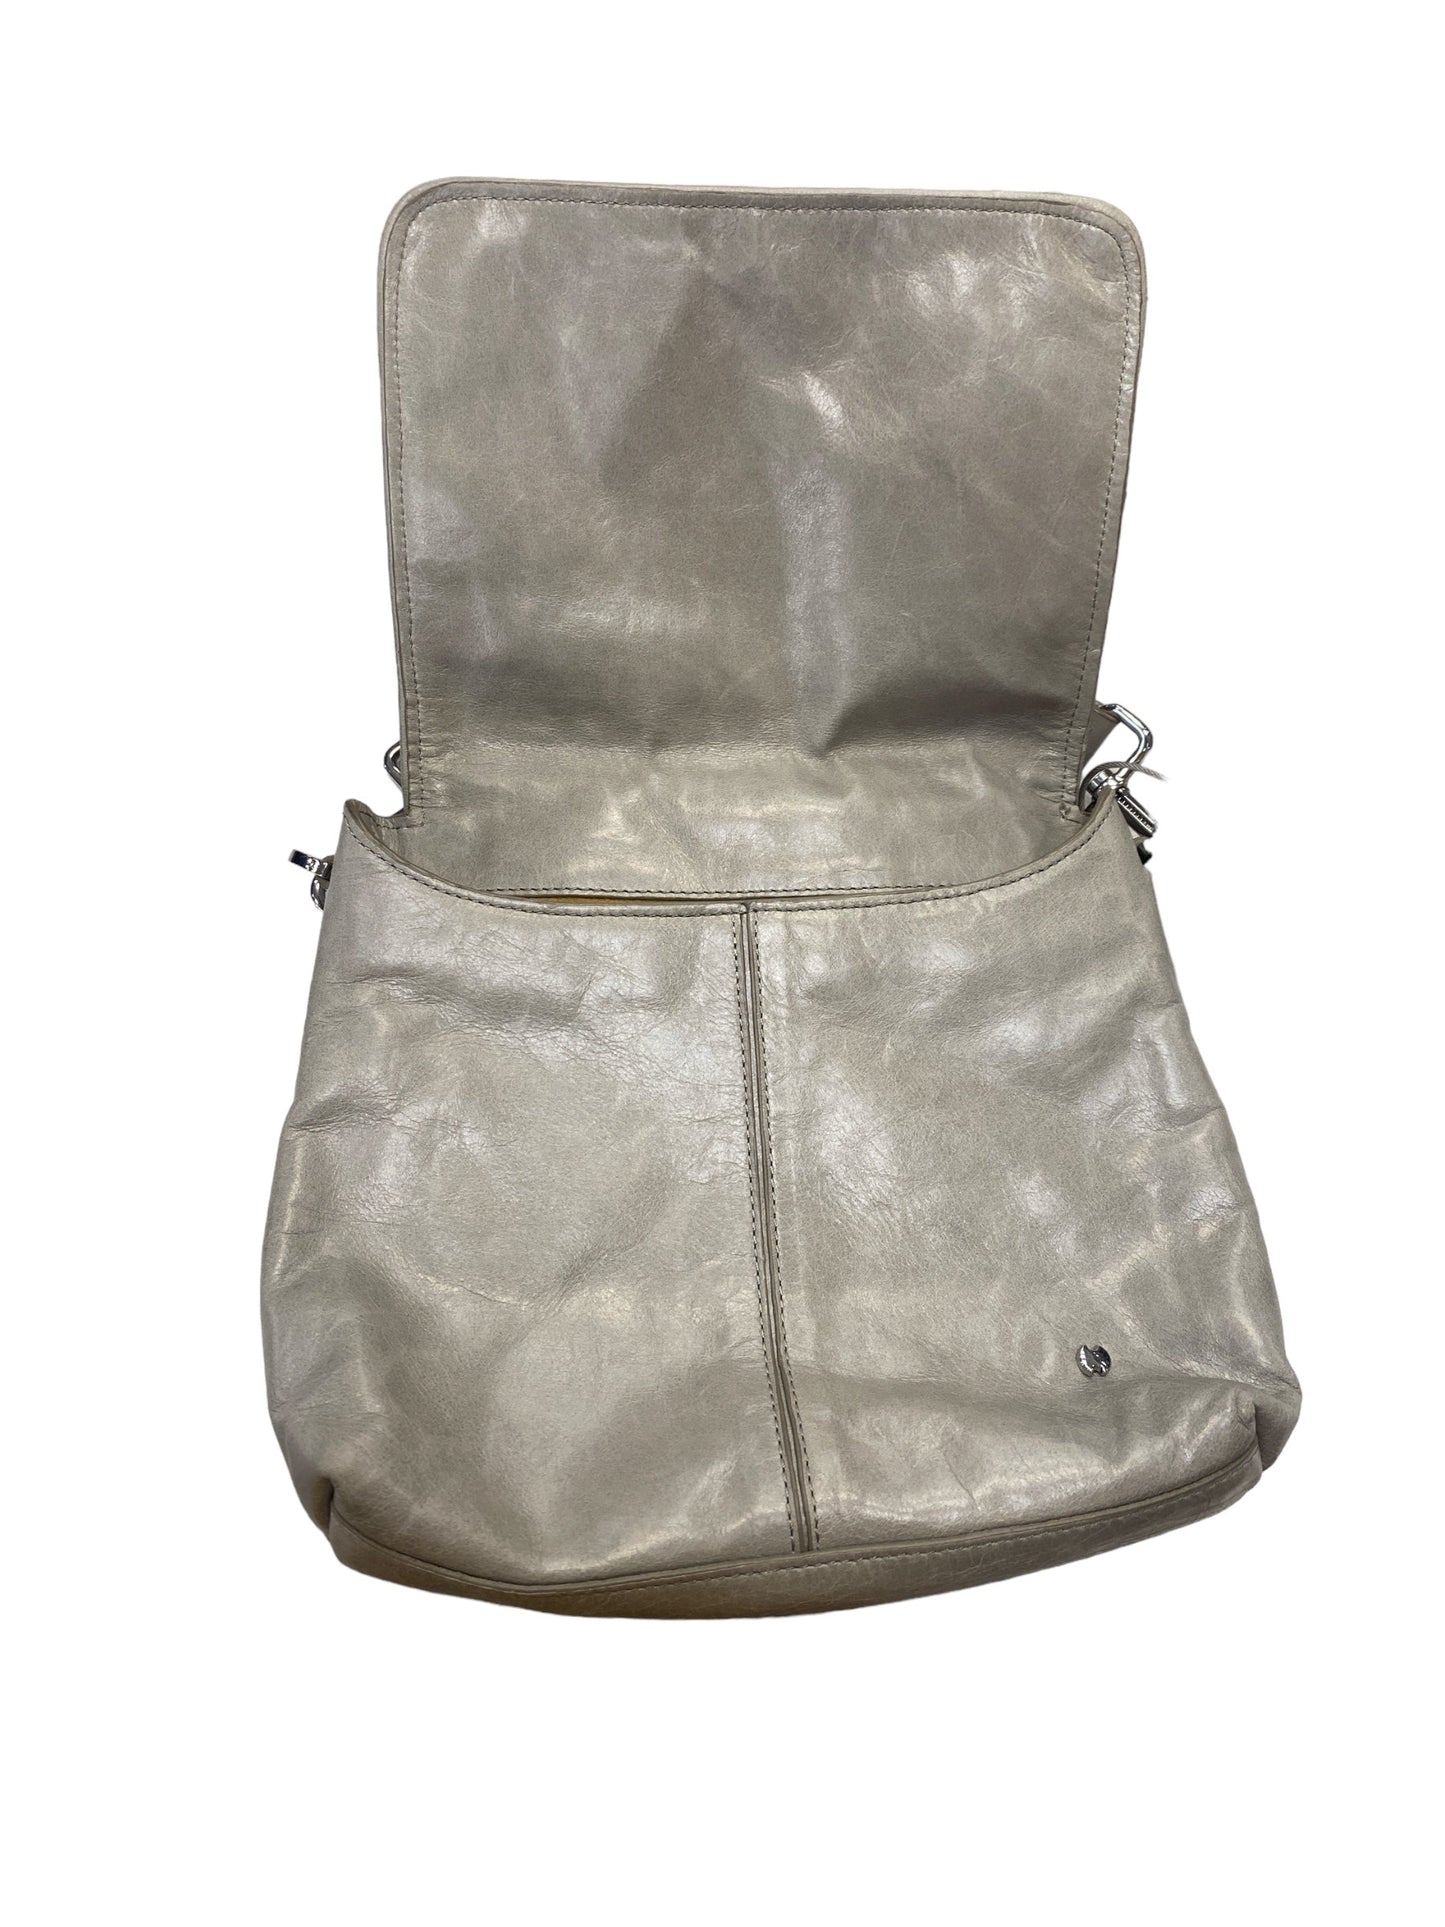 Handbag Leather By Halston Heritage  Size: Small